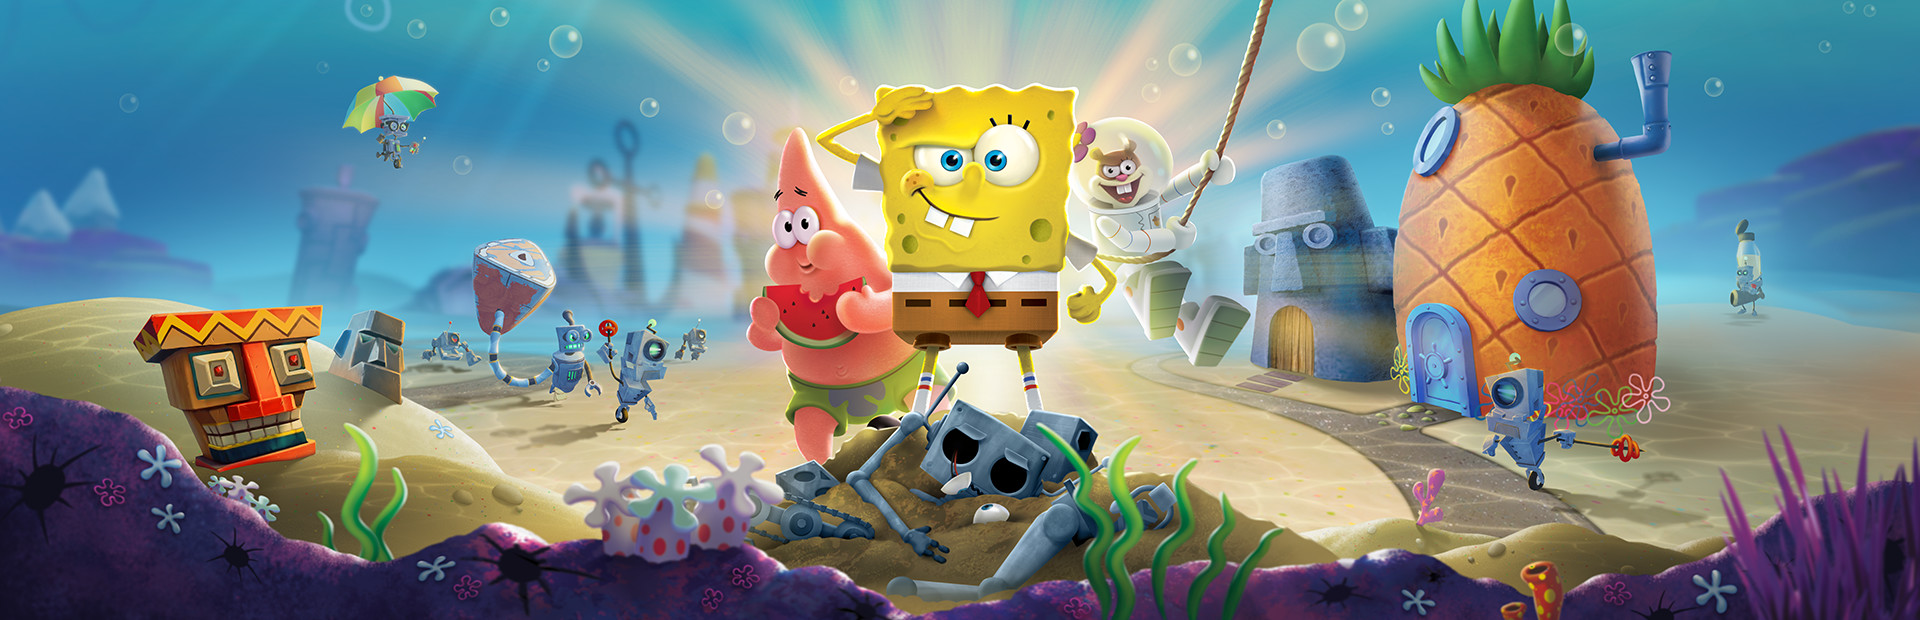 SpongeBob SquarePants: Battle for Bikini Bottom - Rehydrated cover image